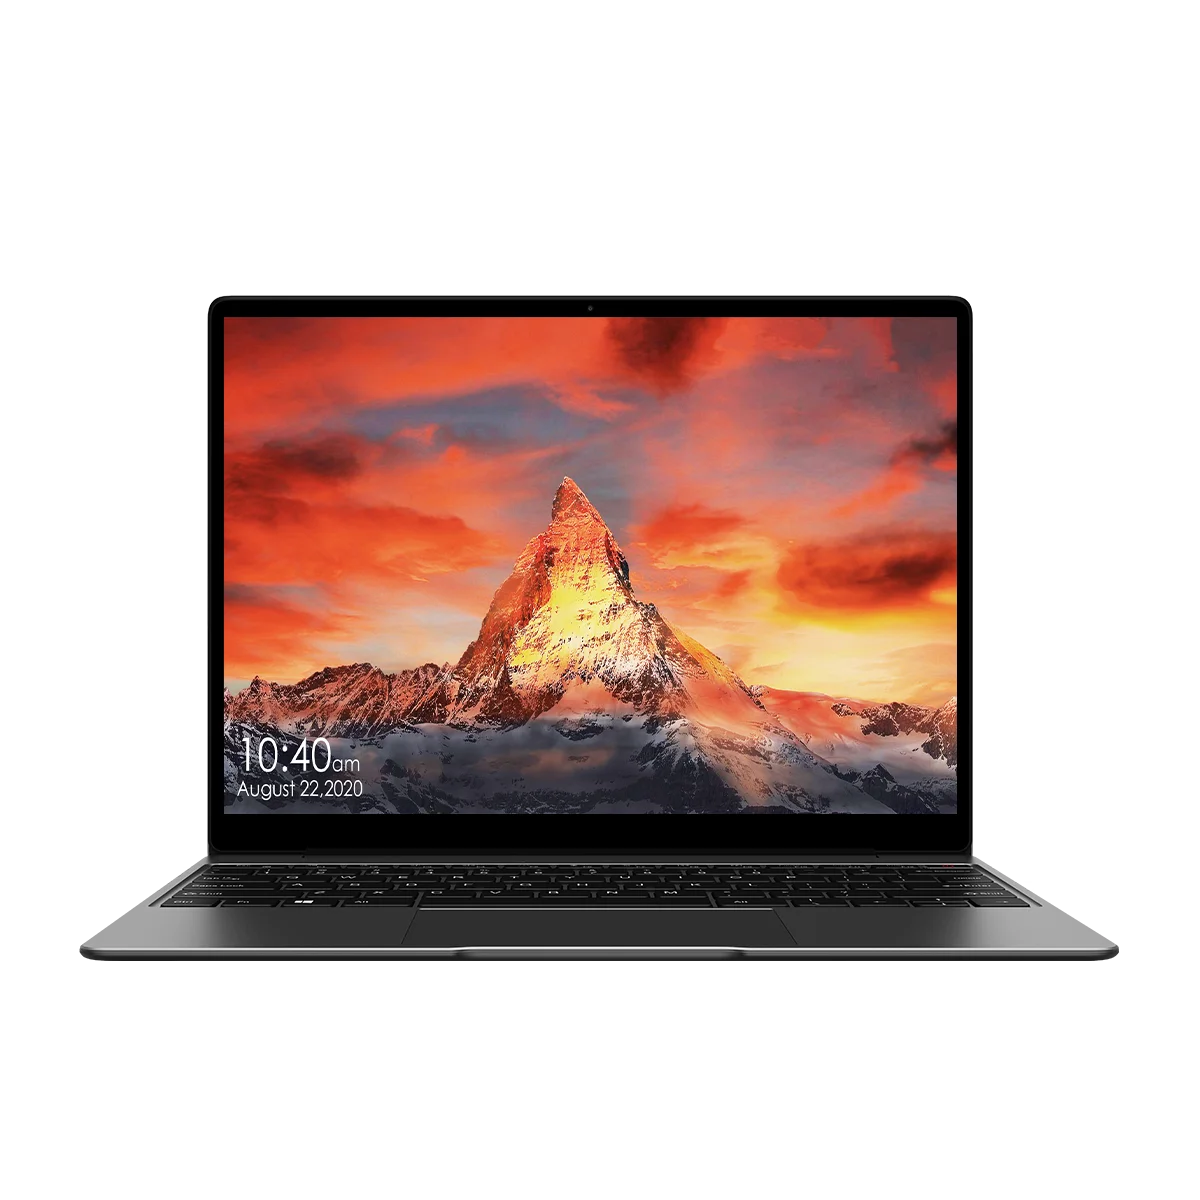 

GemiBook Pro 14 inch 2K Screen Laptop 12GB RAM 256GB SSD Intel Celeron Quad Core Wds 10 Computer with Backlit Keyboard, Silver